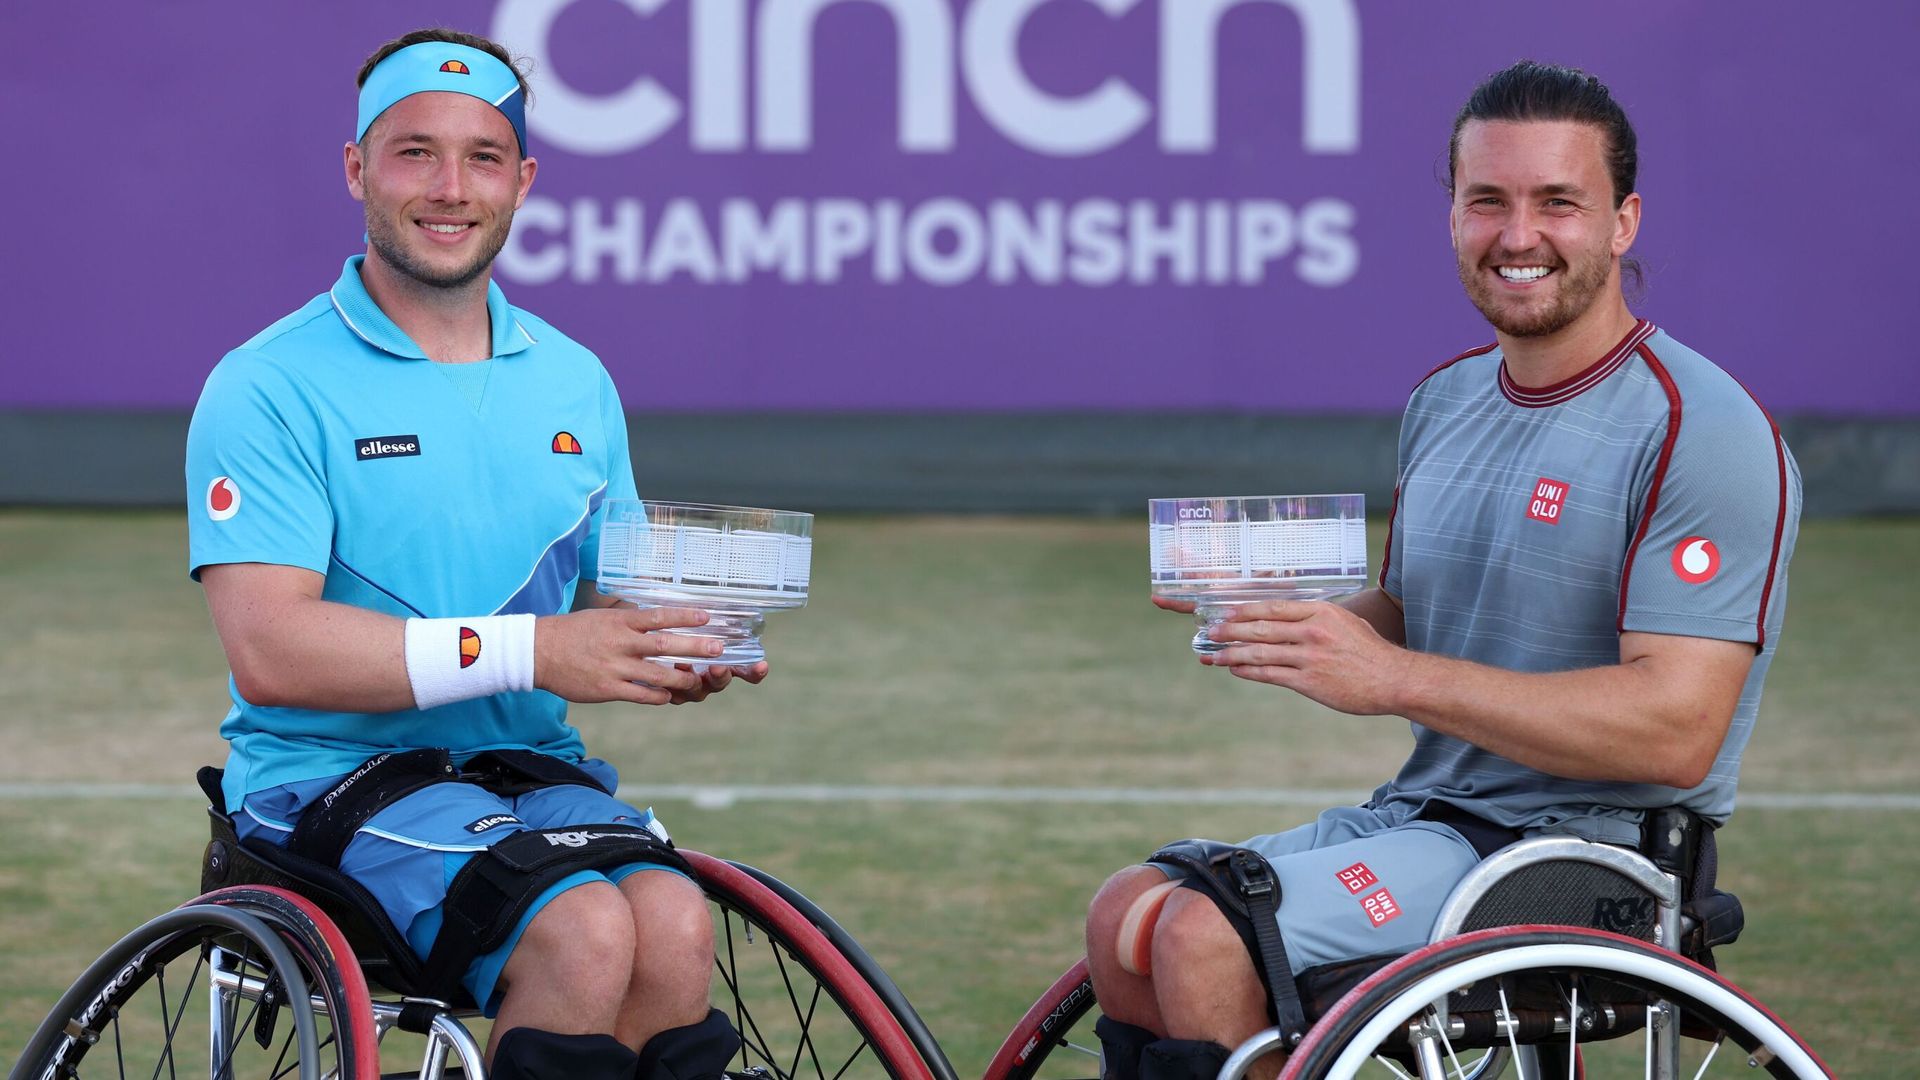 Hewett & Reid clinch Queen's Club wheelchair doubles title